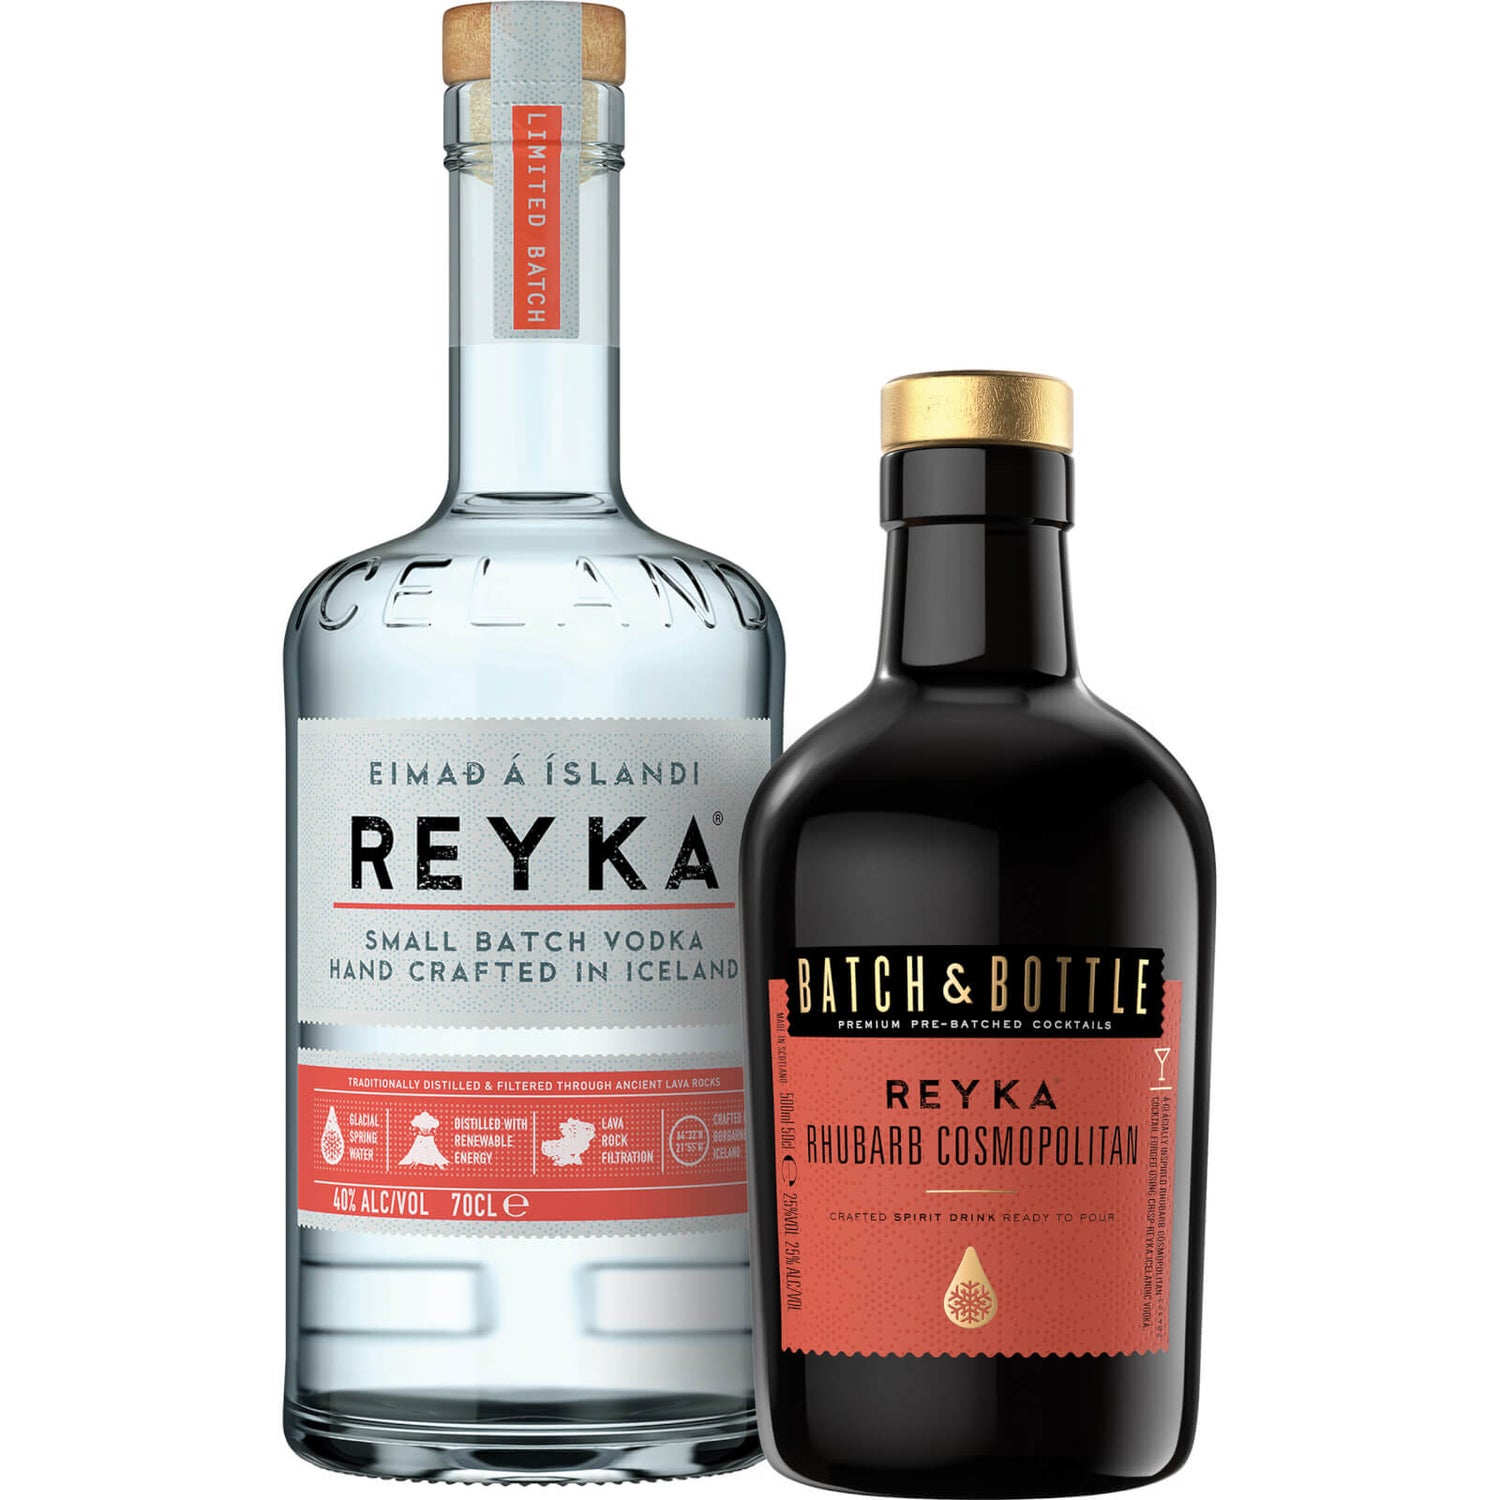 Reyka Icelandic Vodka and Batch & Bottle Rhubarb Cosmopolitan Bundle